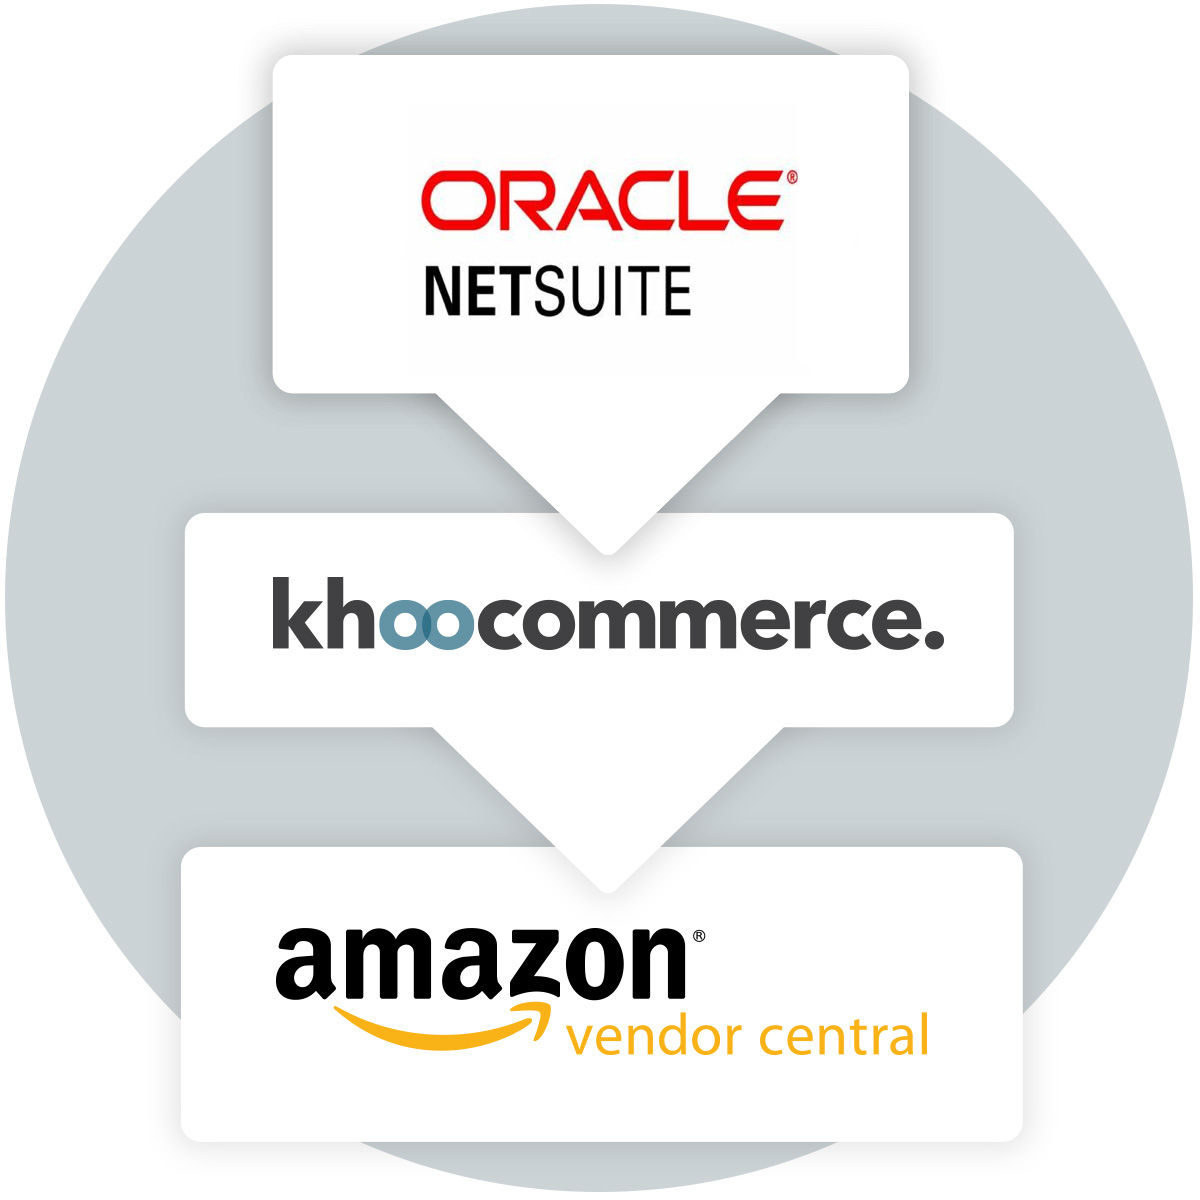 Amazon Vendor Connection through KhooCommerce to Netsuite